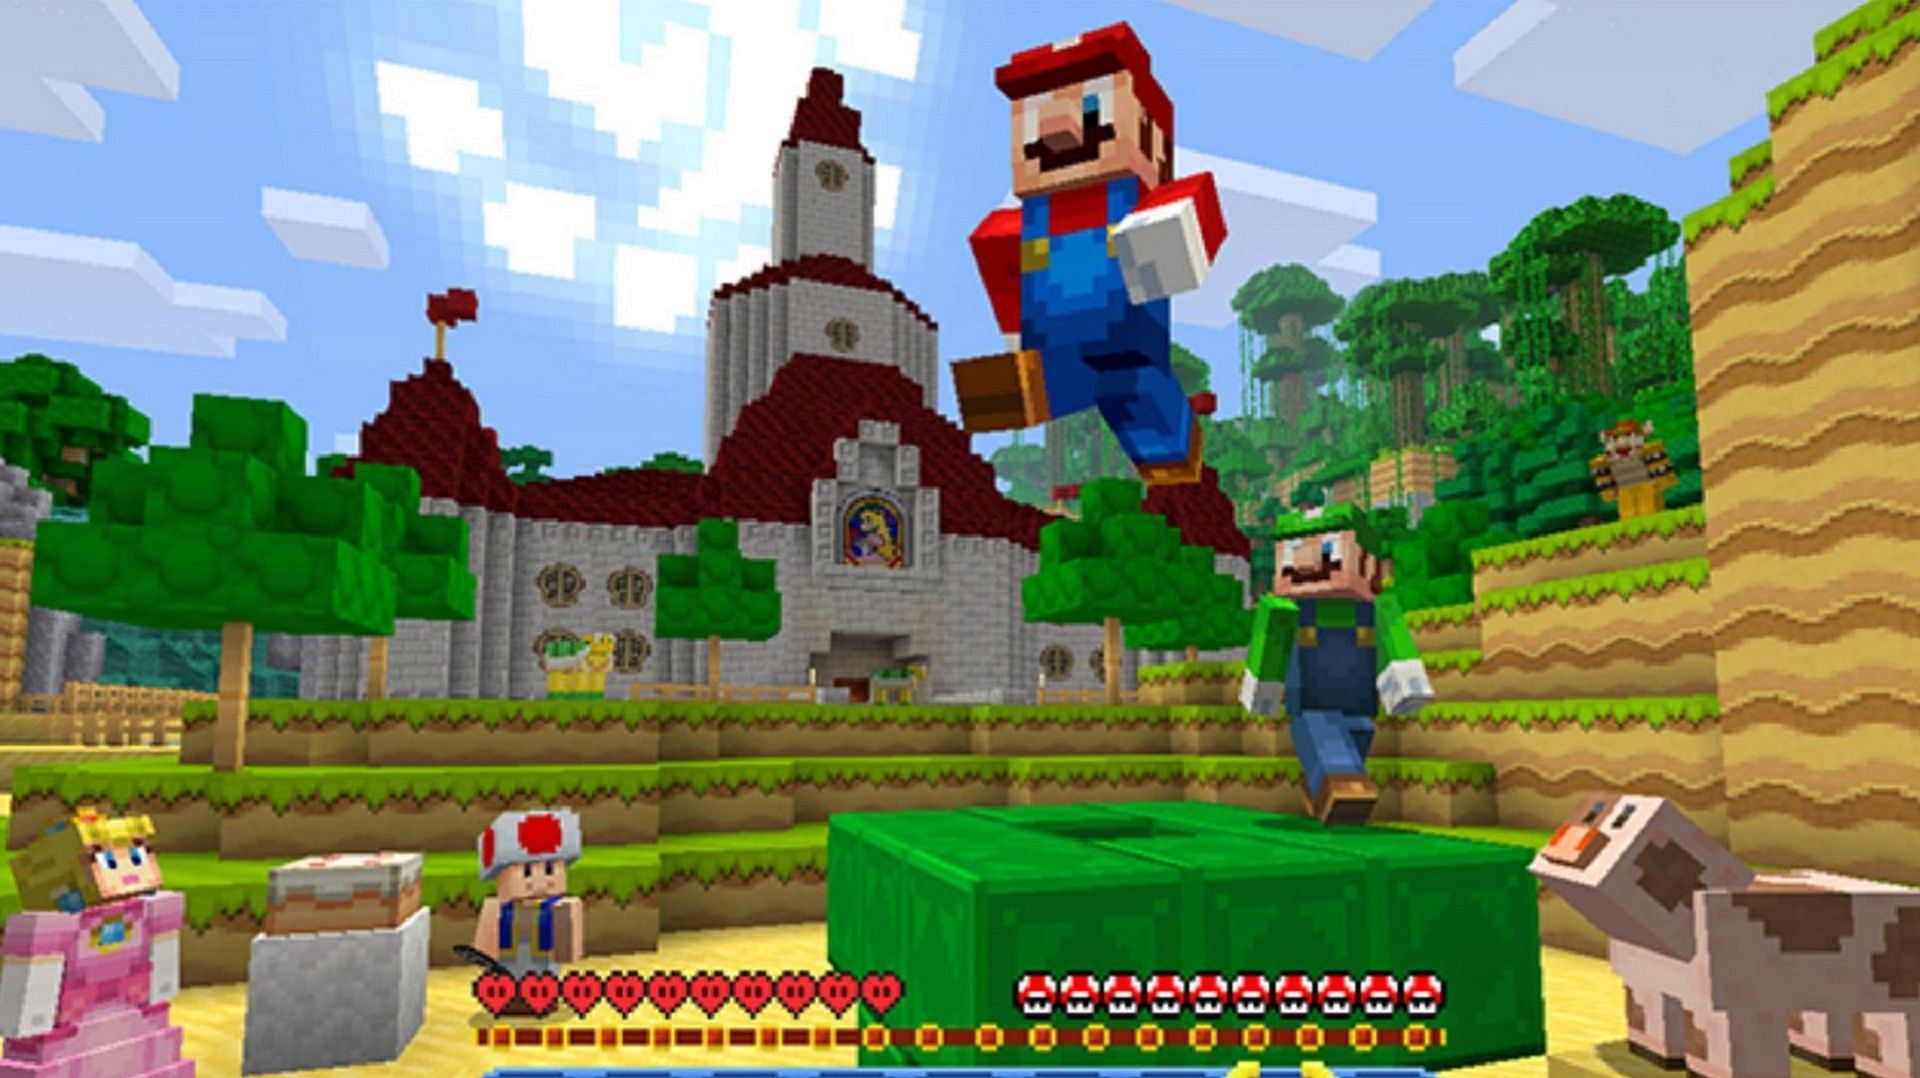 A Super Mario world available on Minecraft: Bedrock Edition for Nintendo Switch (Image via Mojang/Nintendo)